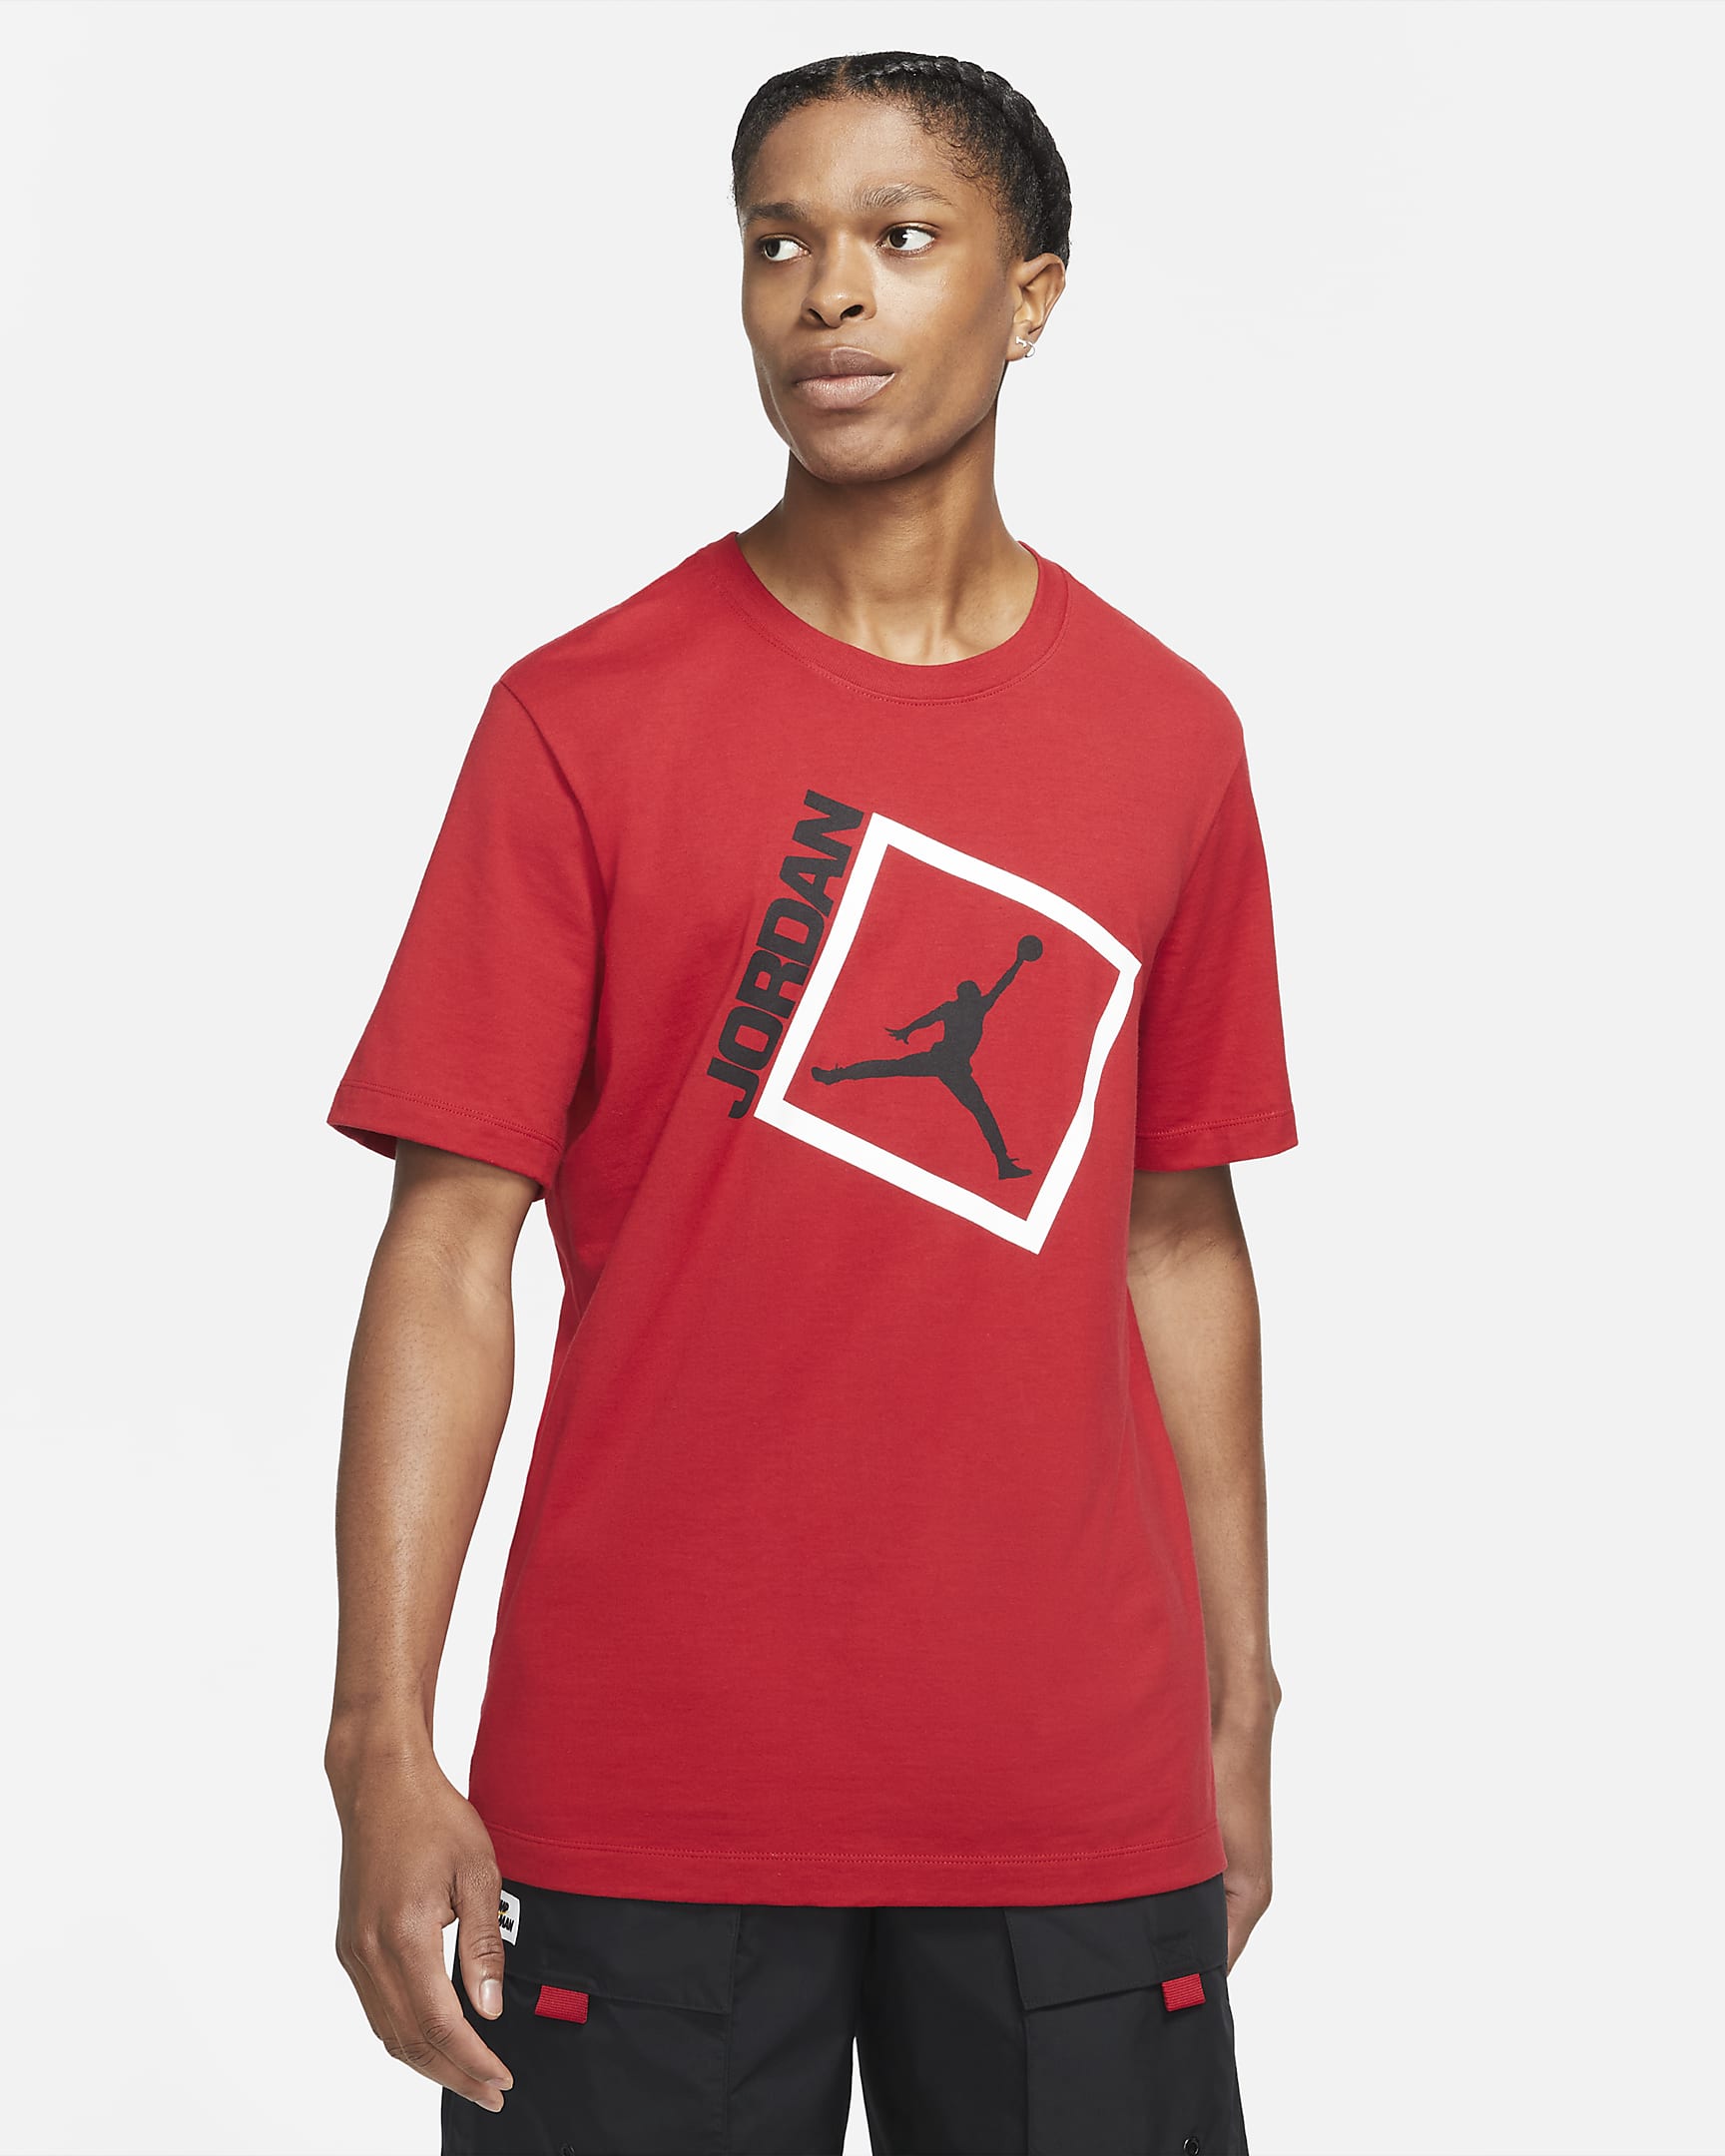 Air Jordan 12 Twist Shirts Hats Clothing Outfits to Match